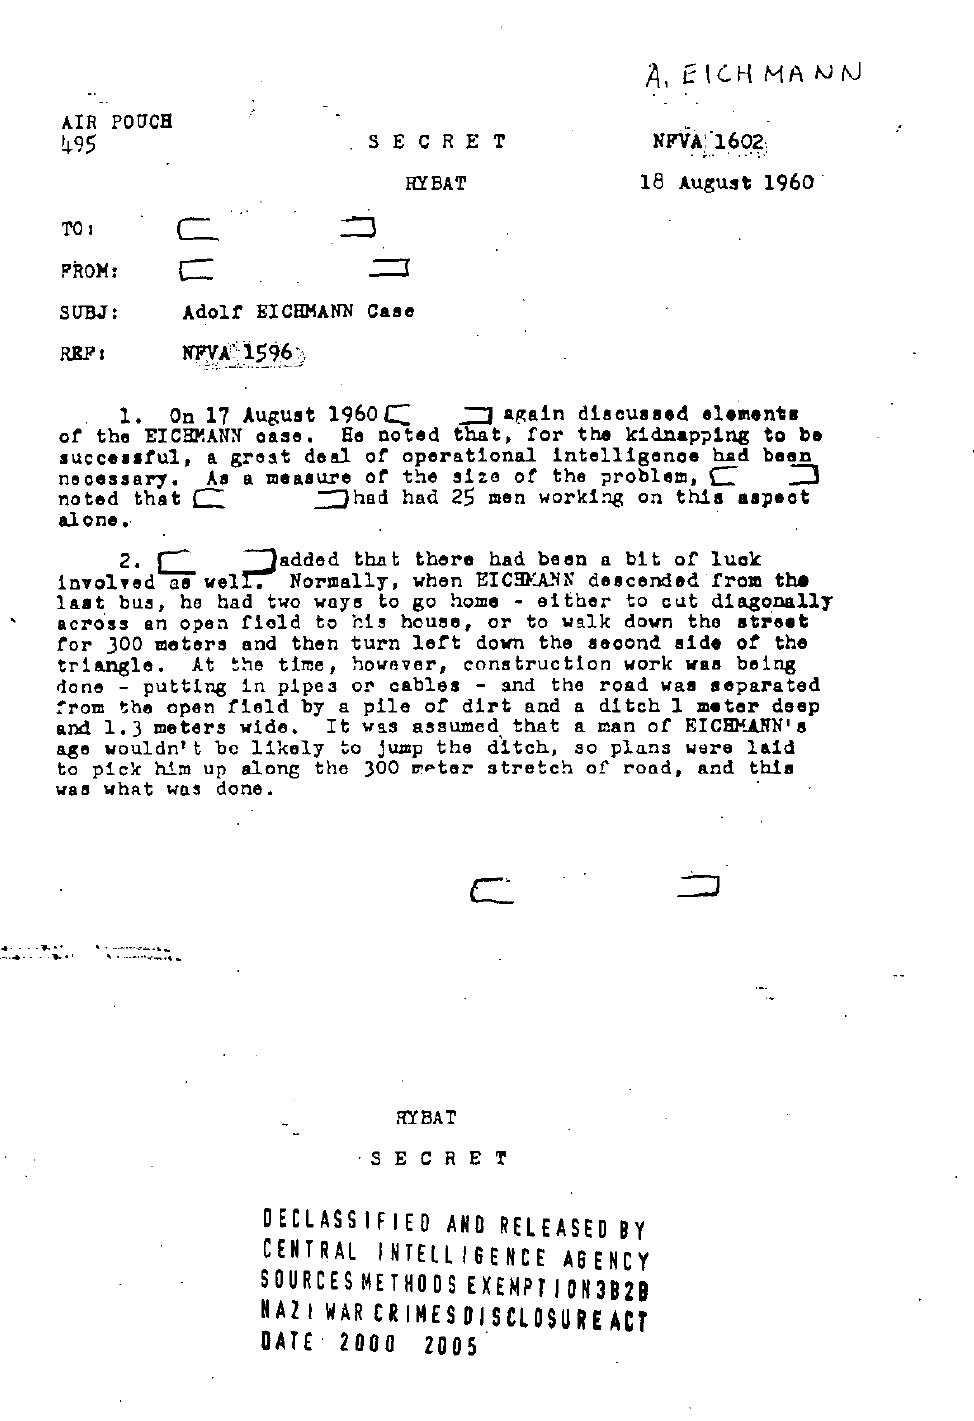 Adolf Eichmann CIA Files Sample Page 4